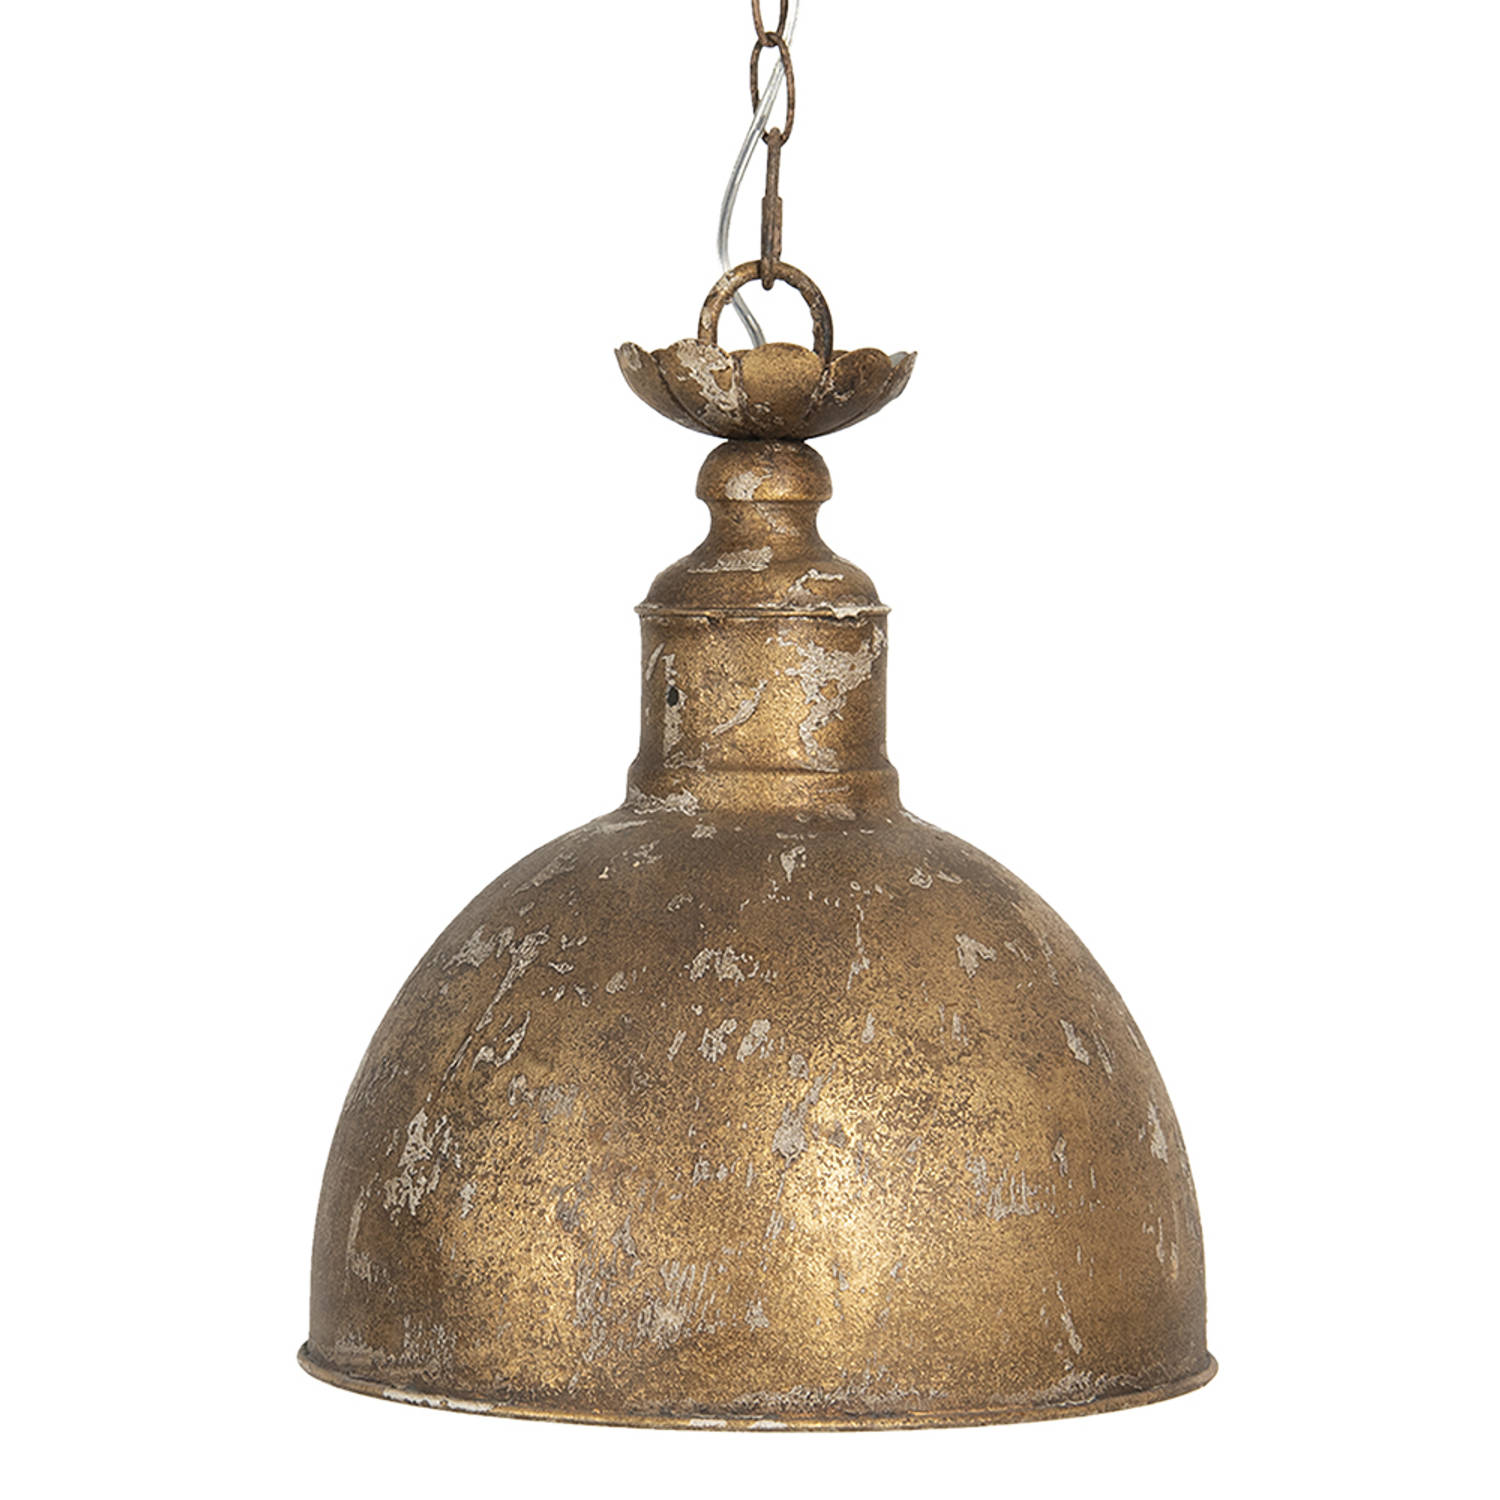 HAES DECO - Hanglamp - Industrial - Koperkleurige Vintage Lamp, Ø 29*35 cm - Ronde Hanglamp Eettafel, Hanglamp Eetkamer